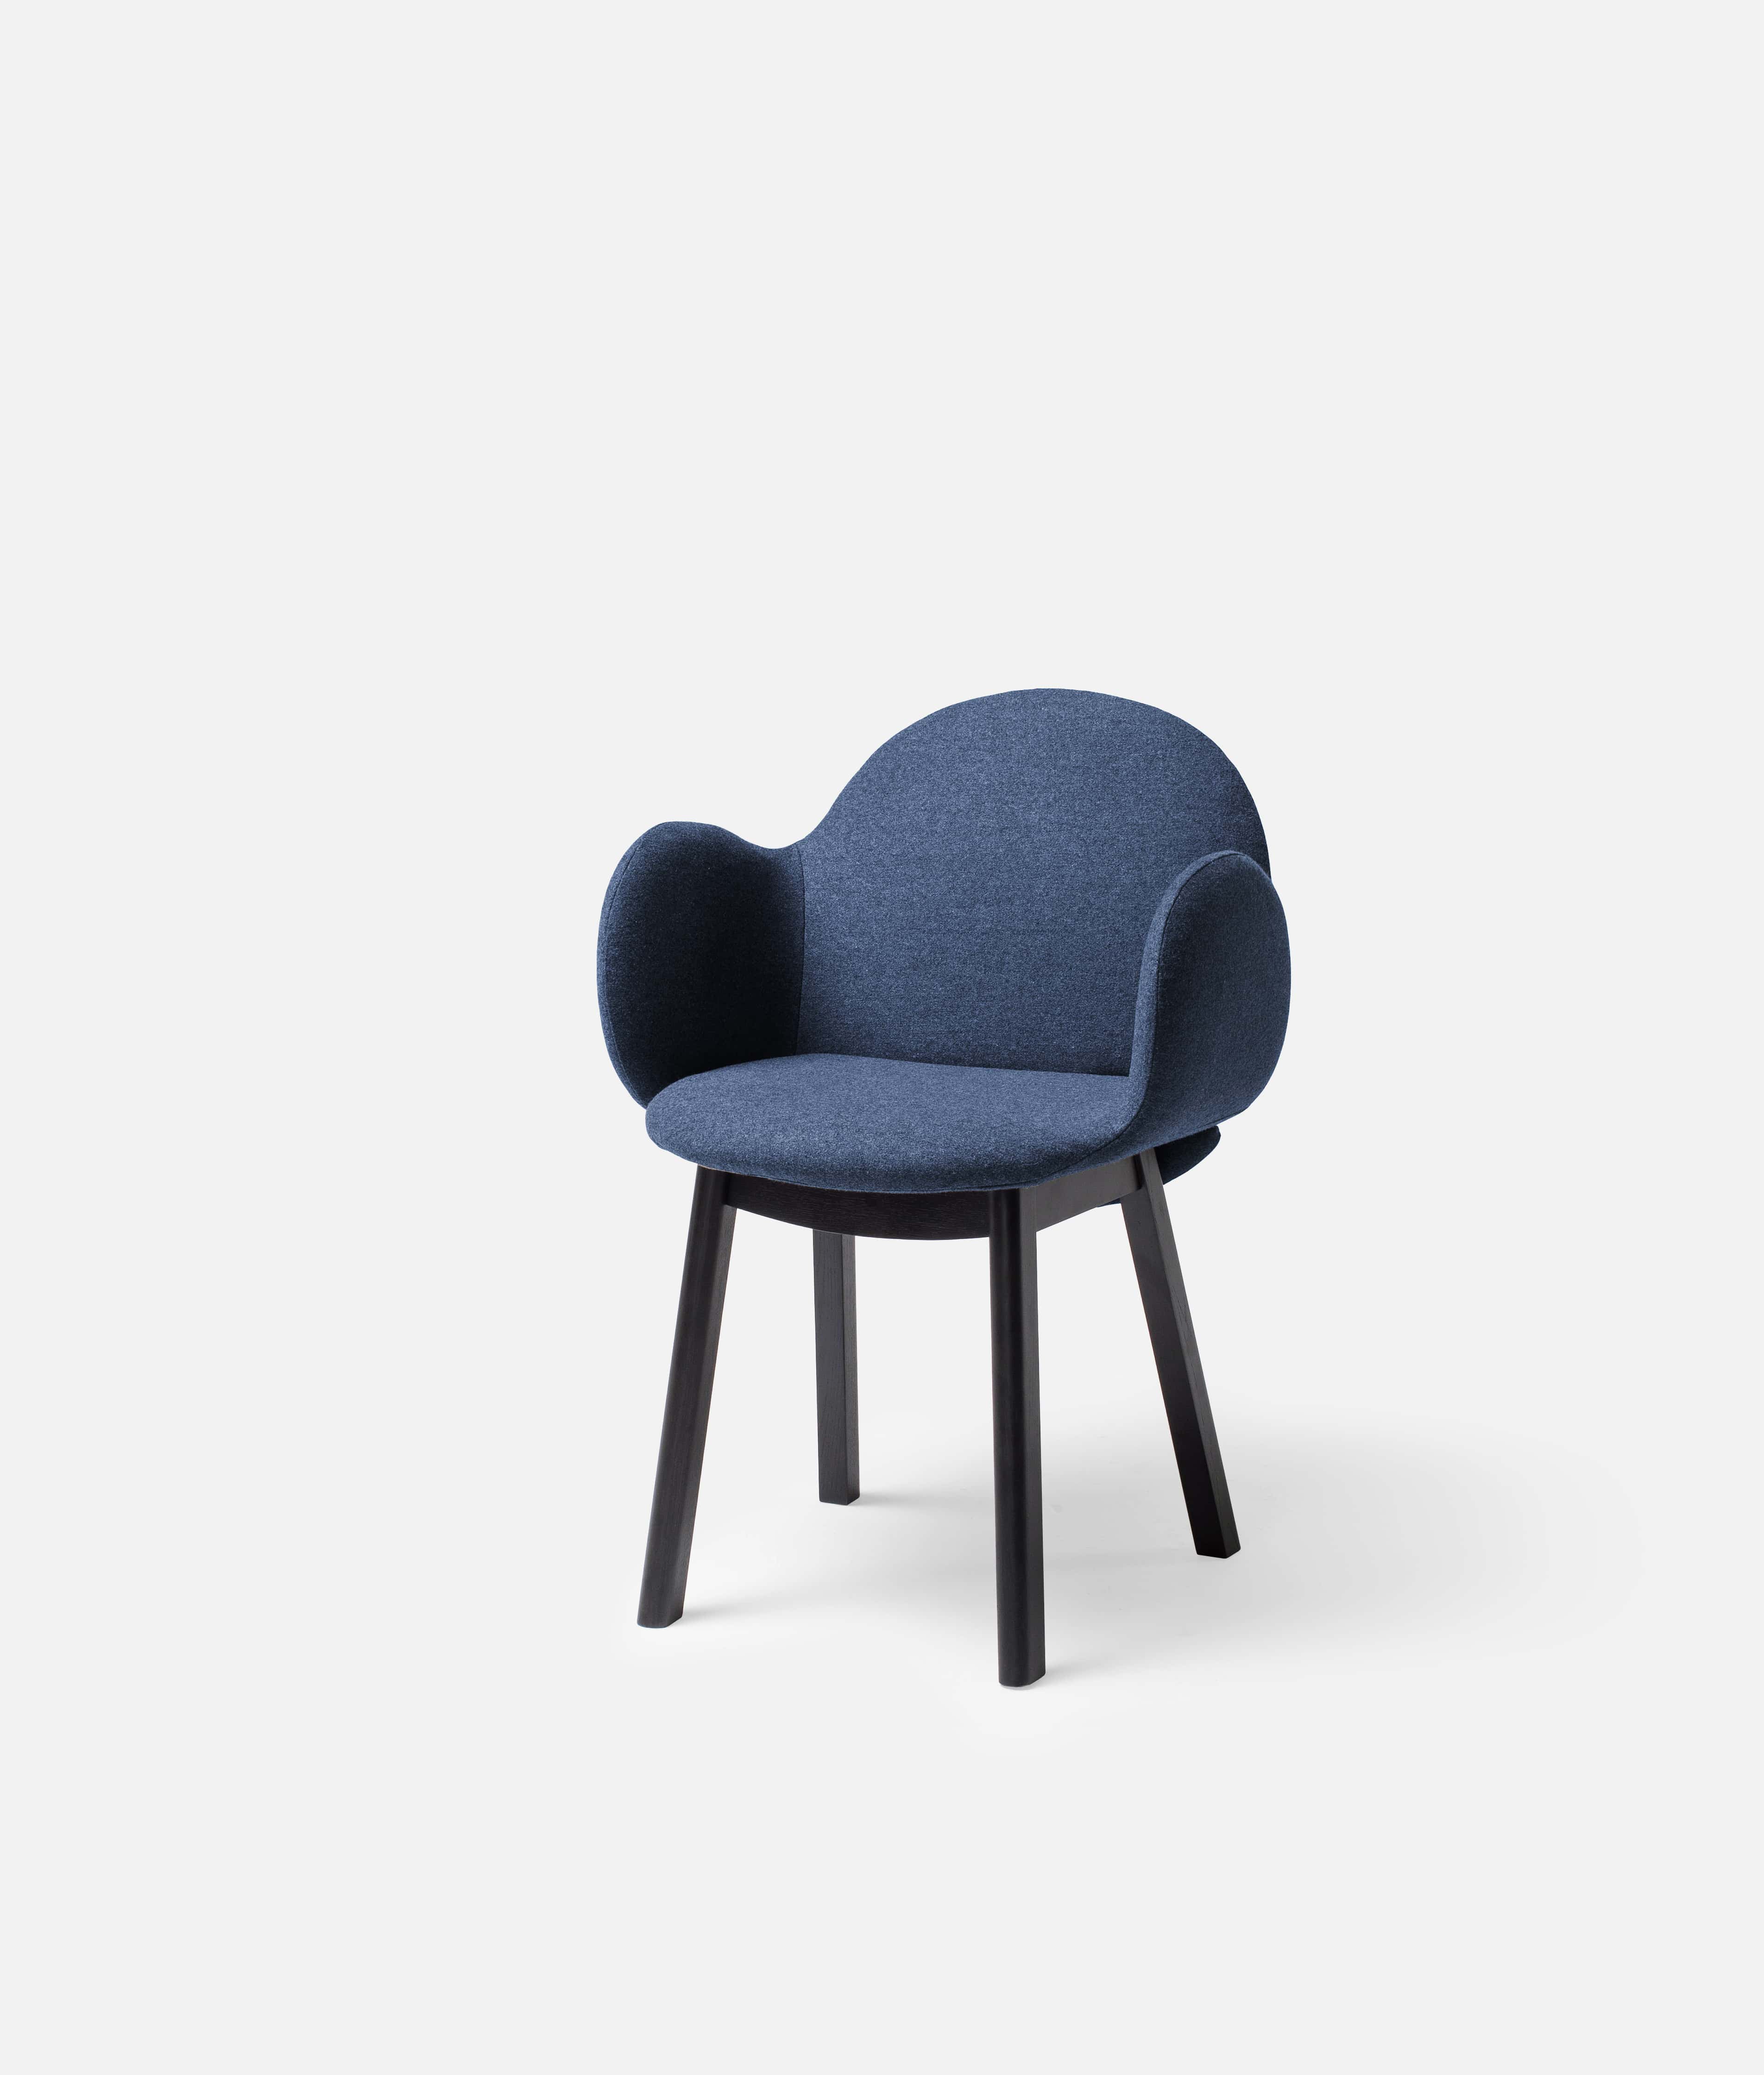 IMPROVISE CHAIR Chair ziinlife Blue